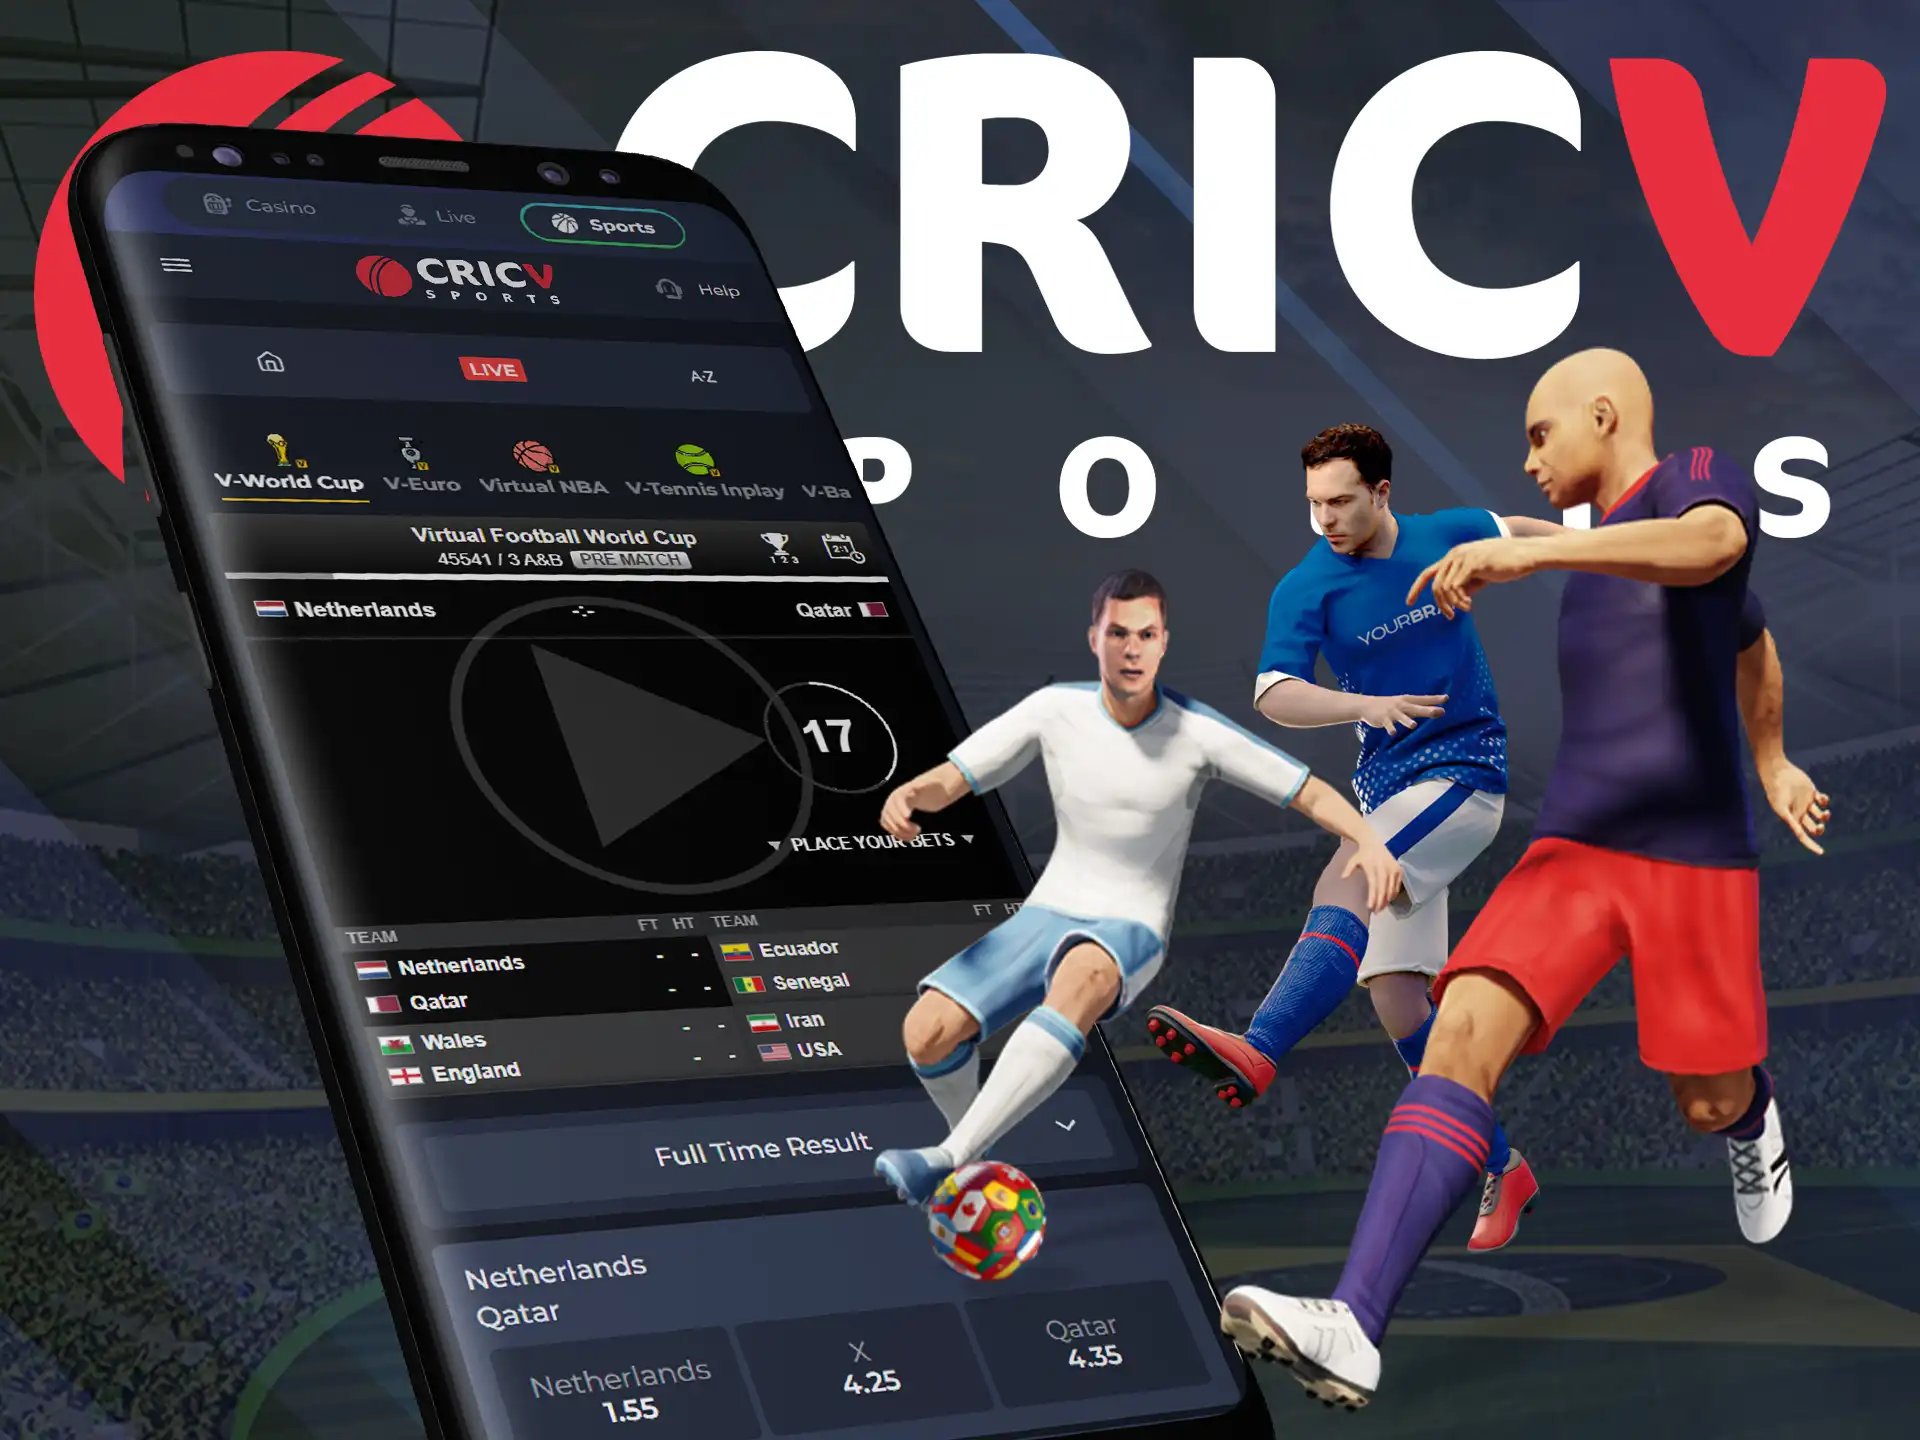 Betting on virtual sports is very popular among CricV players.